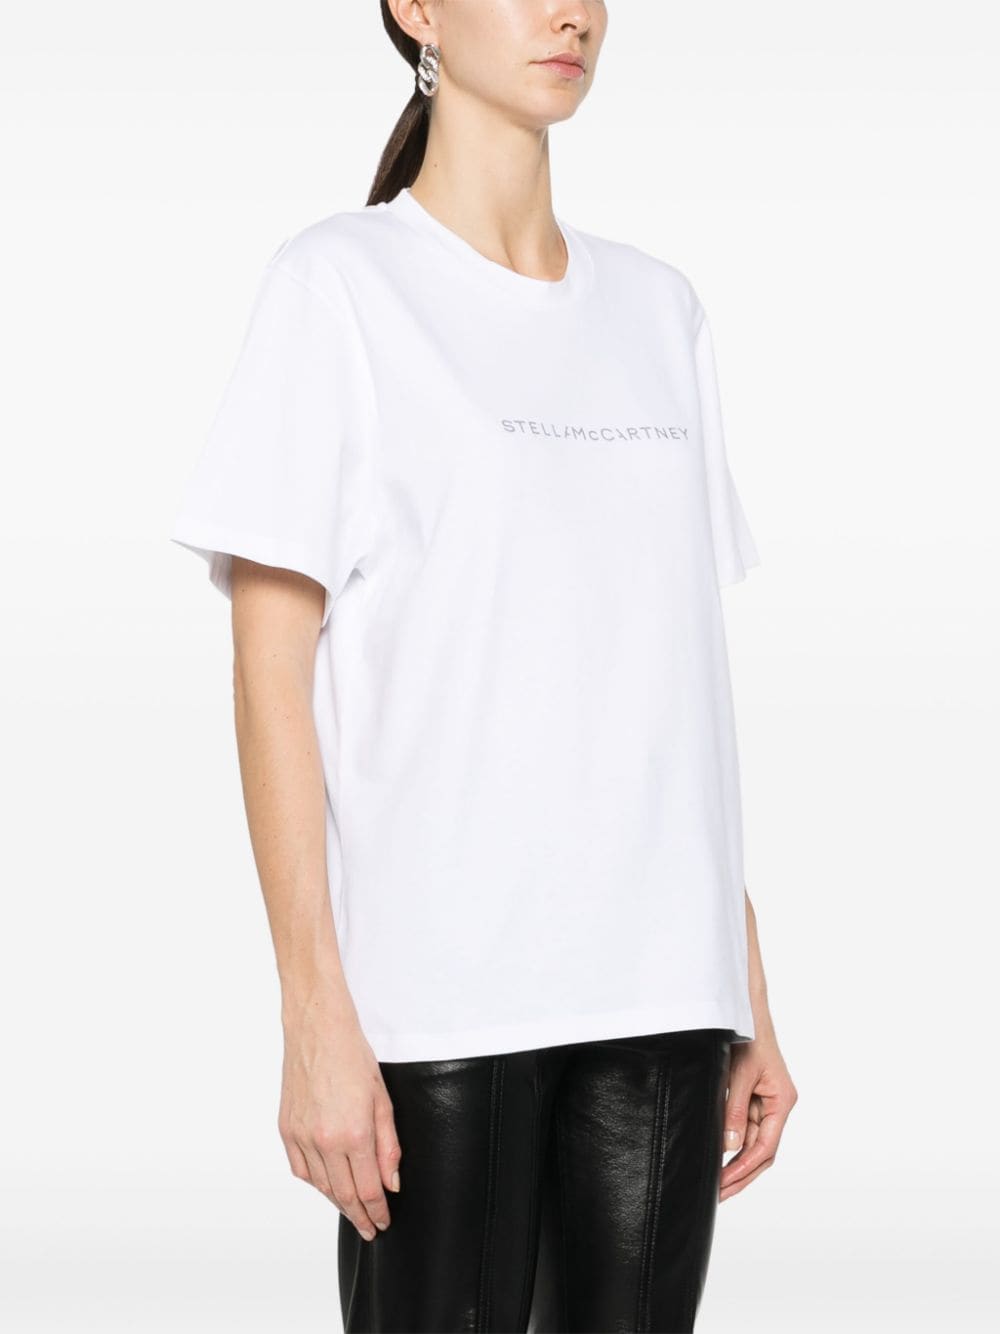 White logo-print cotton T-shirt<BR/><BR/><BR/>